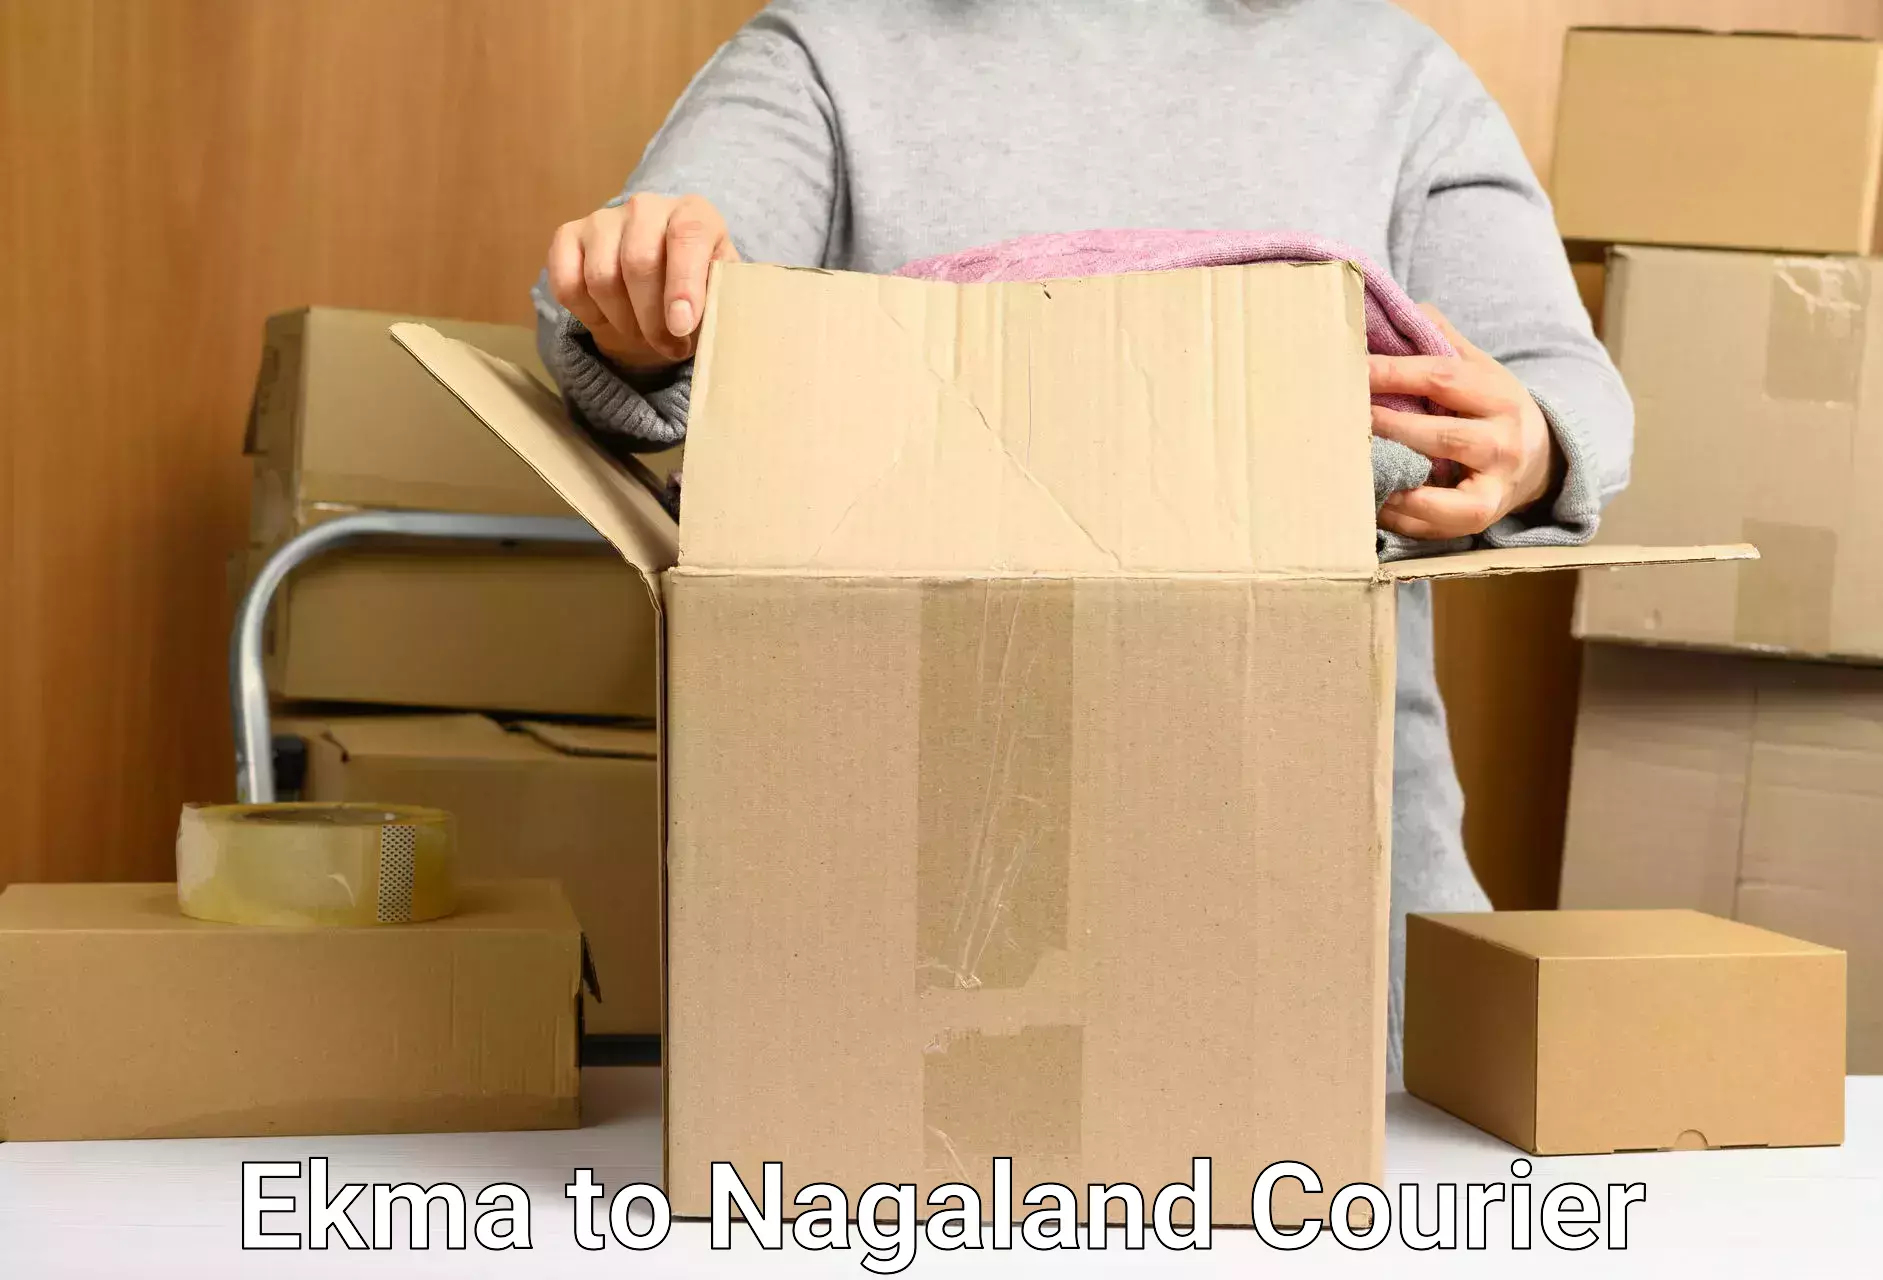 Tech-enabled shipping Ekma to Nagaland